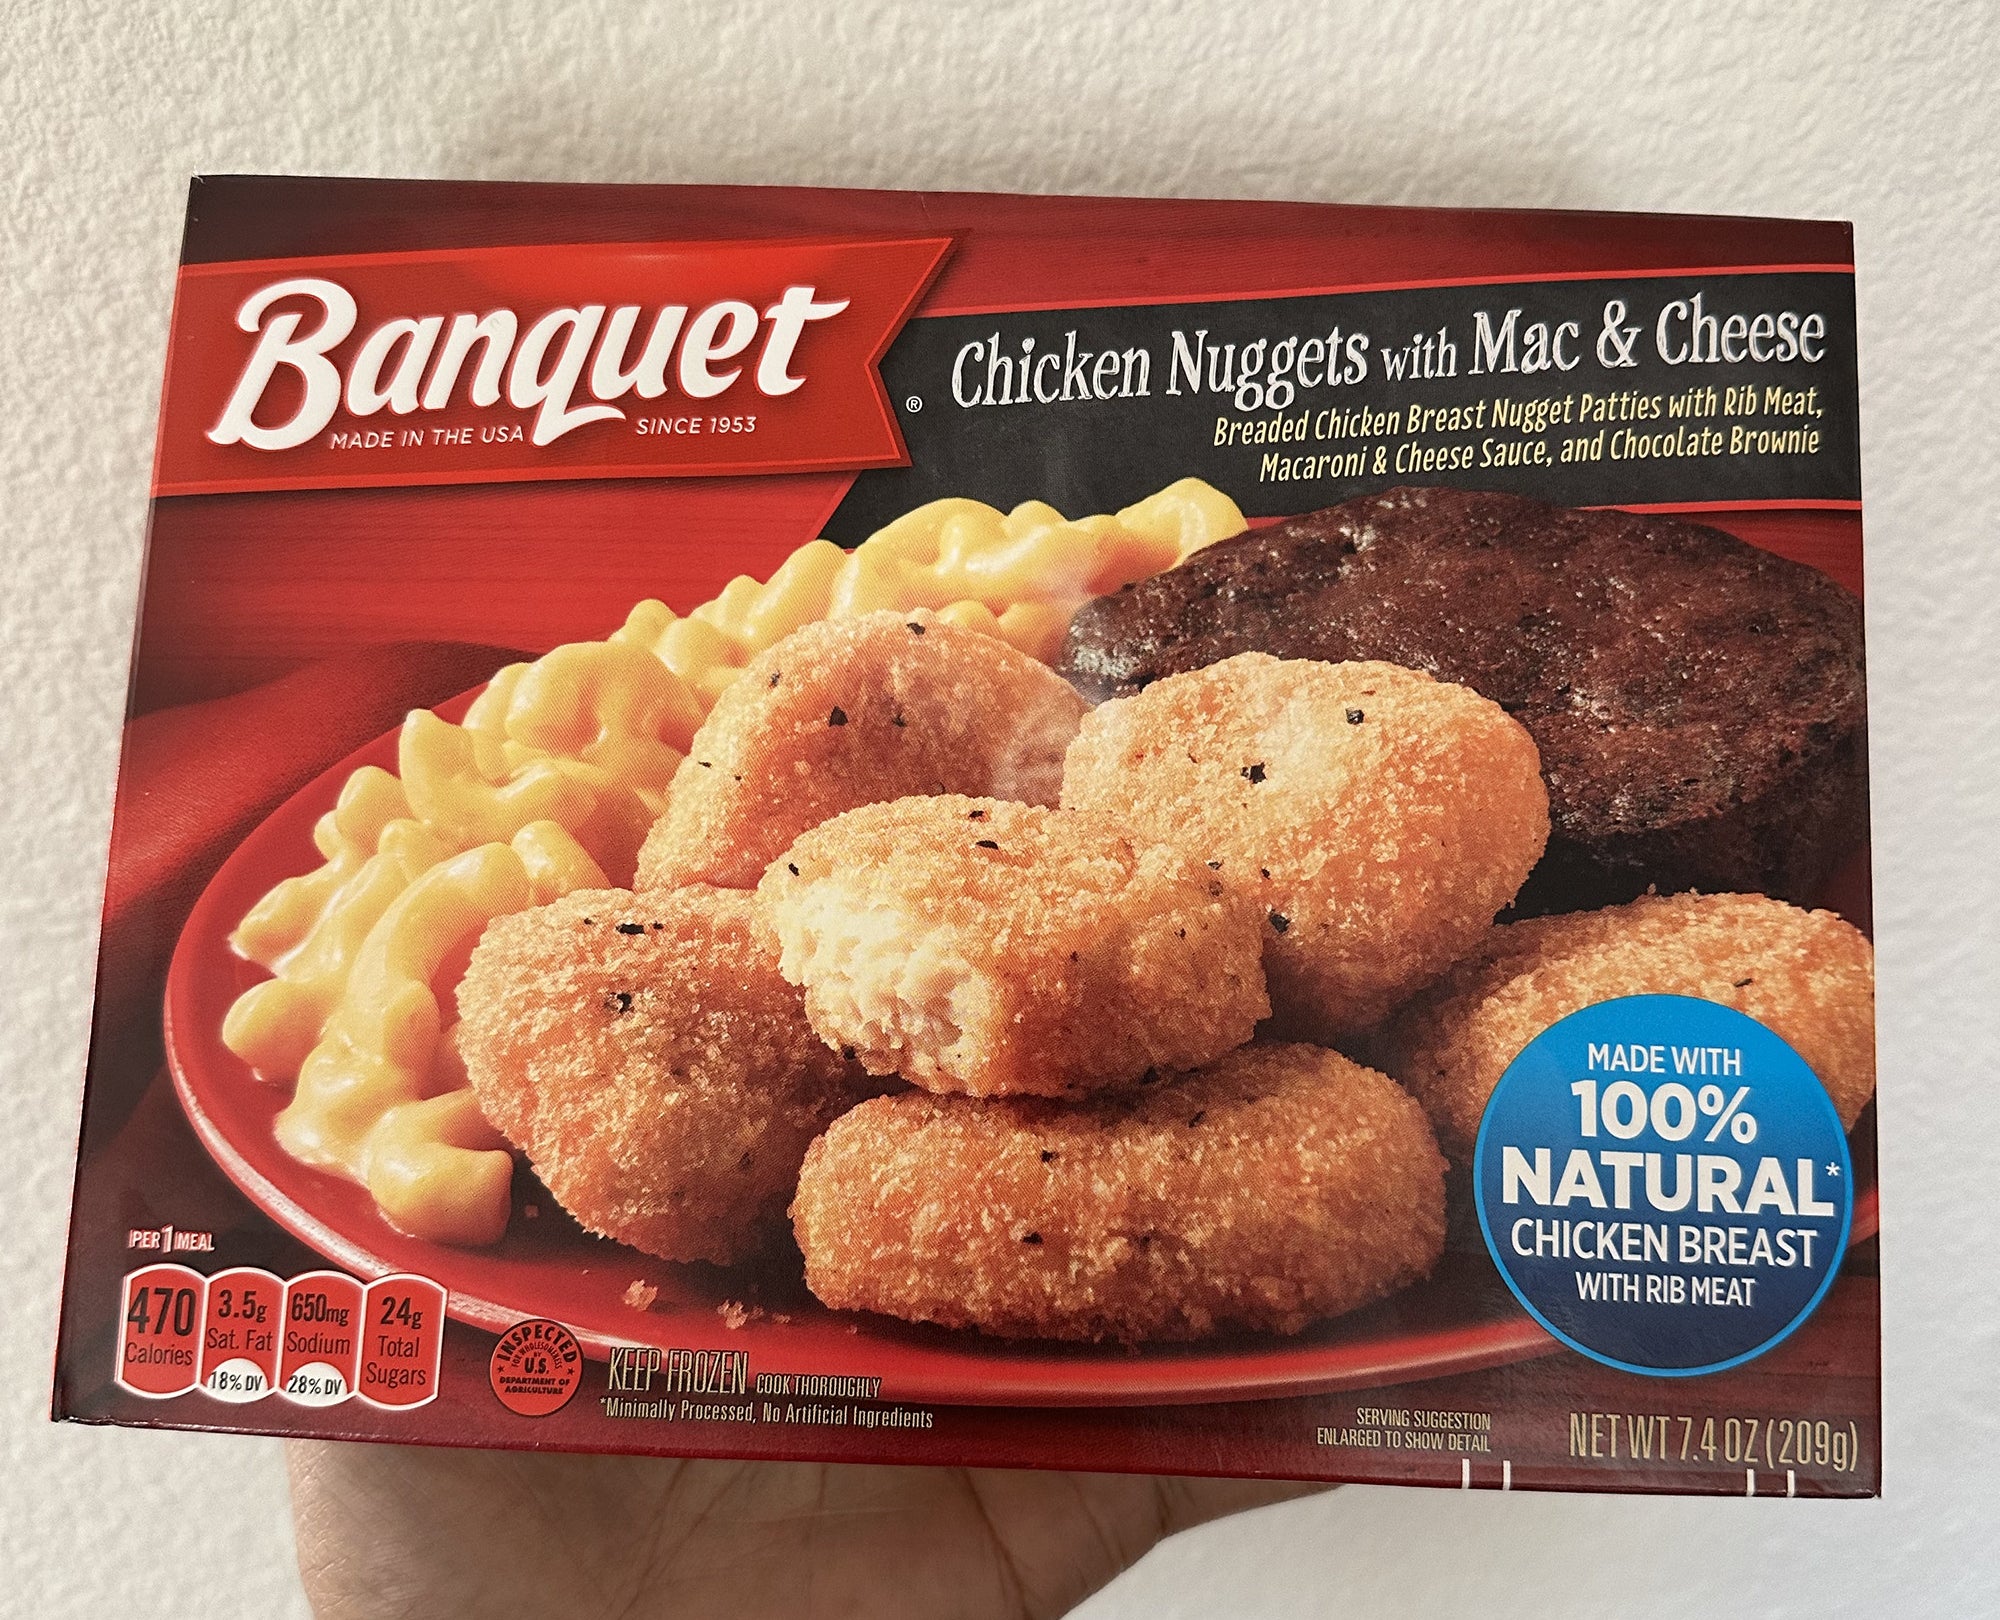 A Banquet Chicken Nuggets frozen dinner package